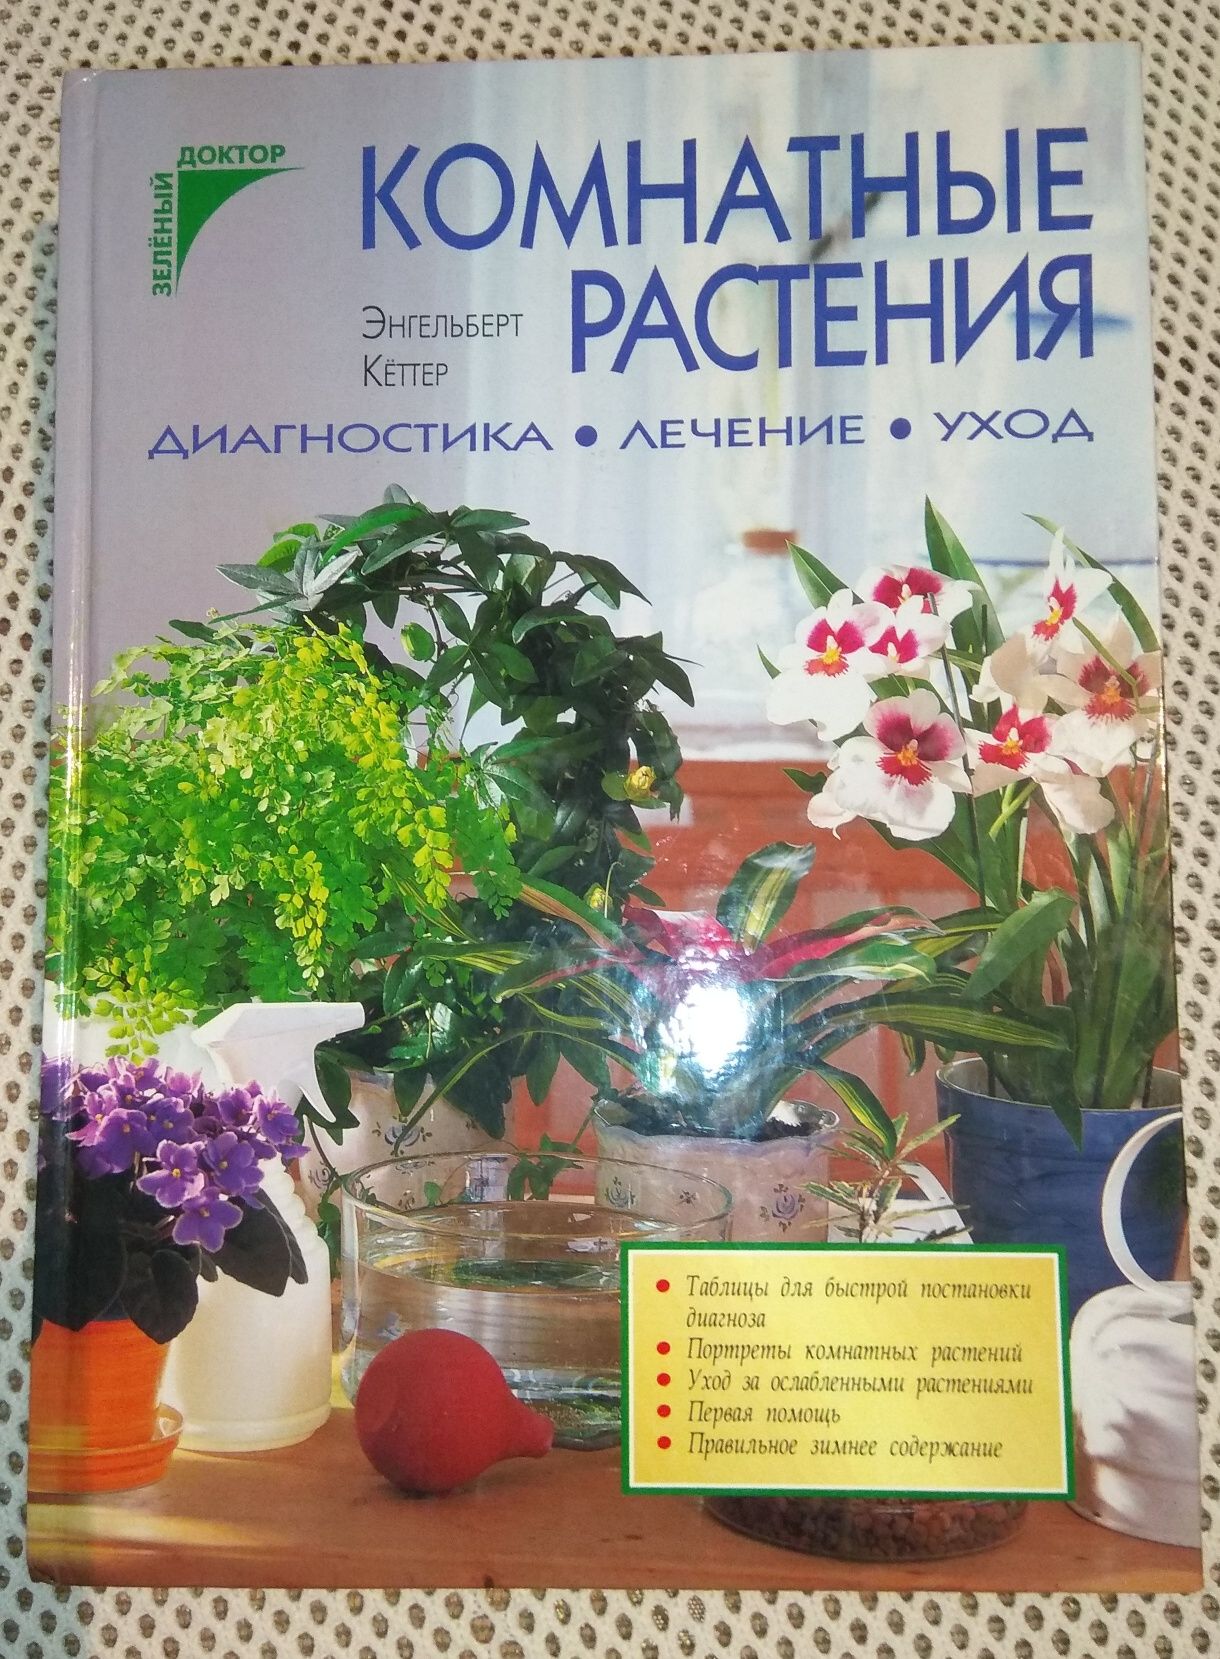 Книги о кімнатних растений